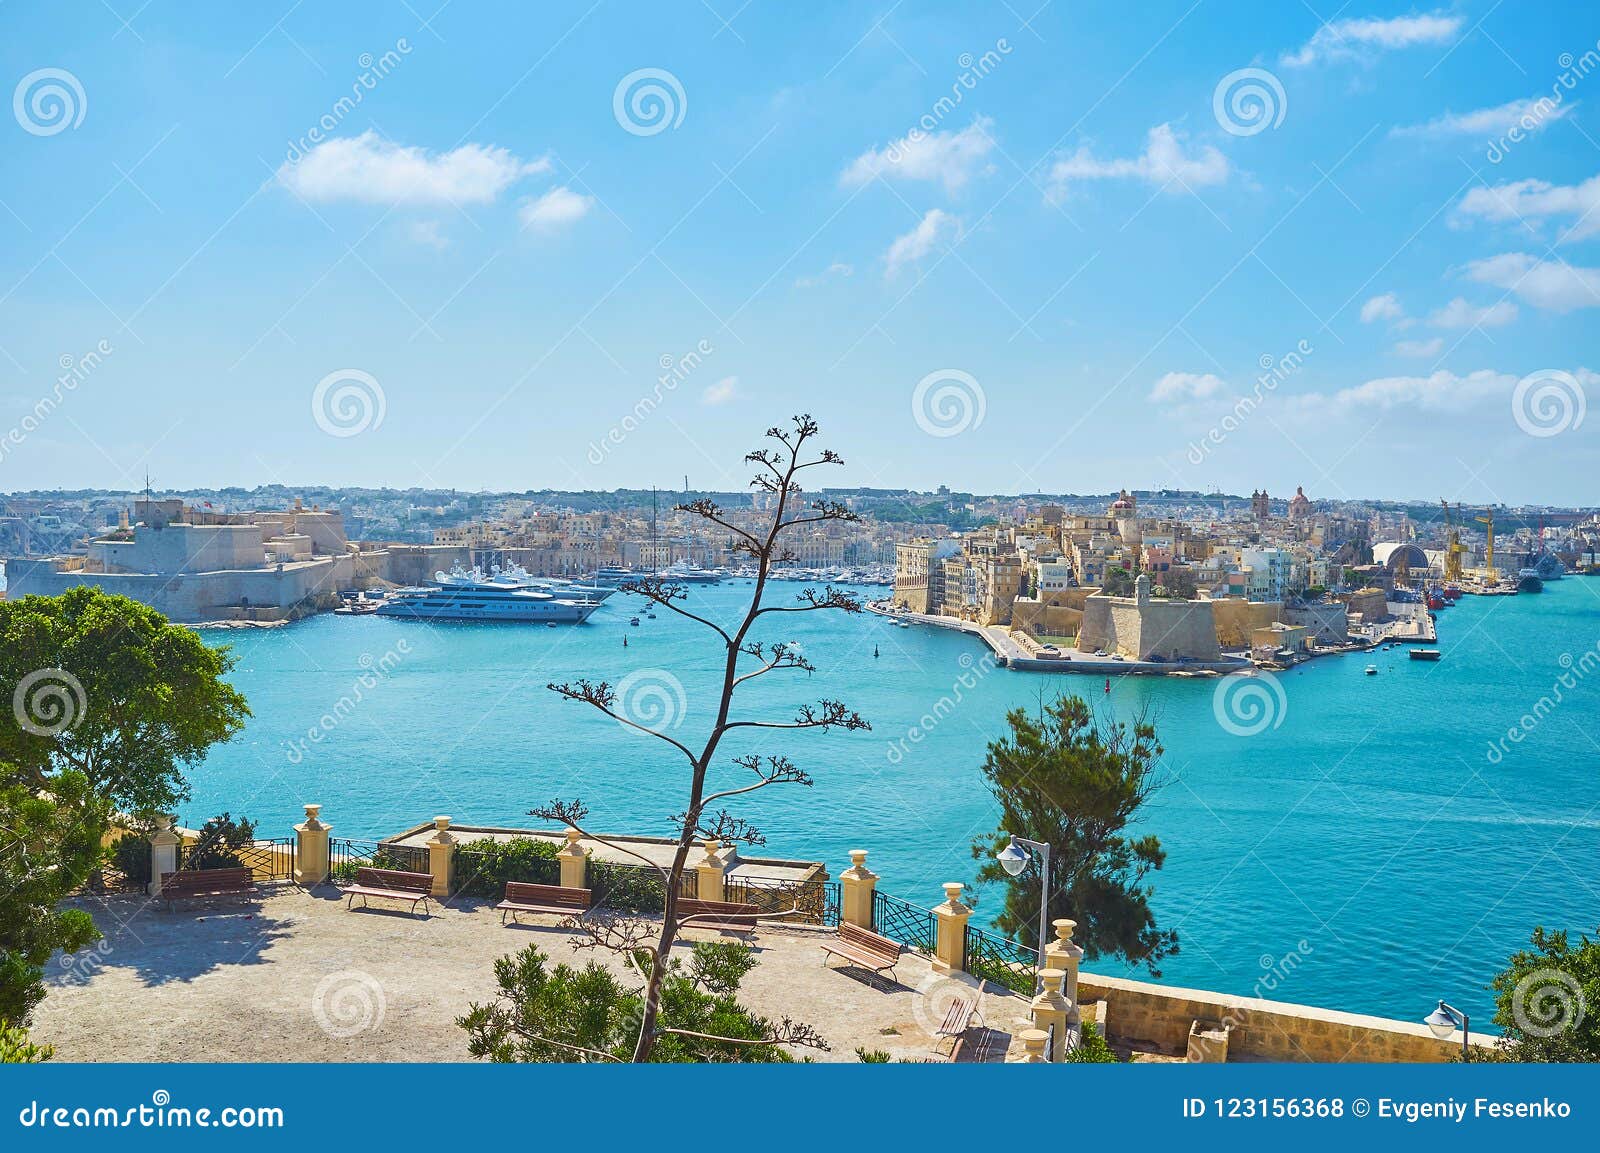 medieval cities of valletta grand harbour, malta